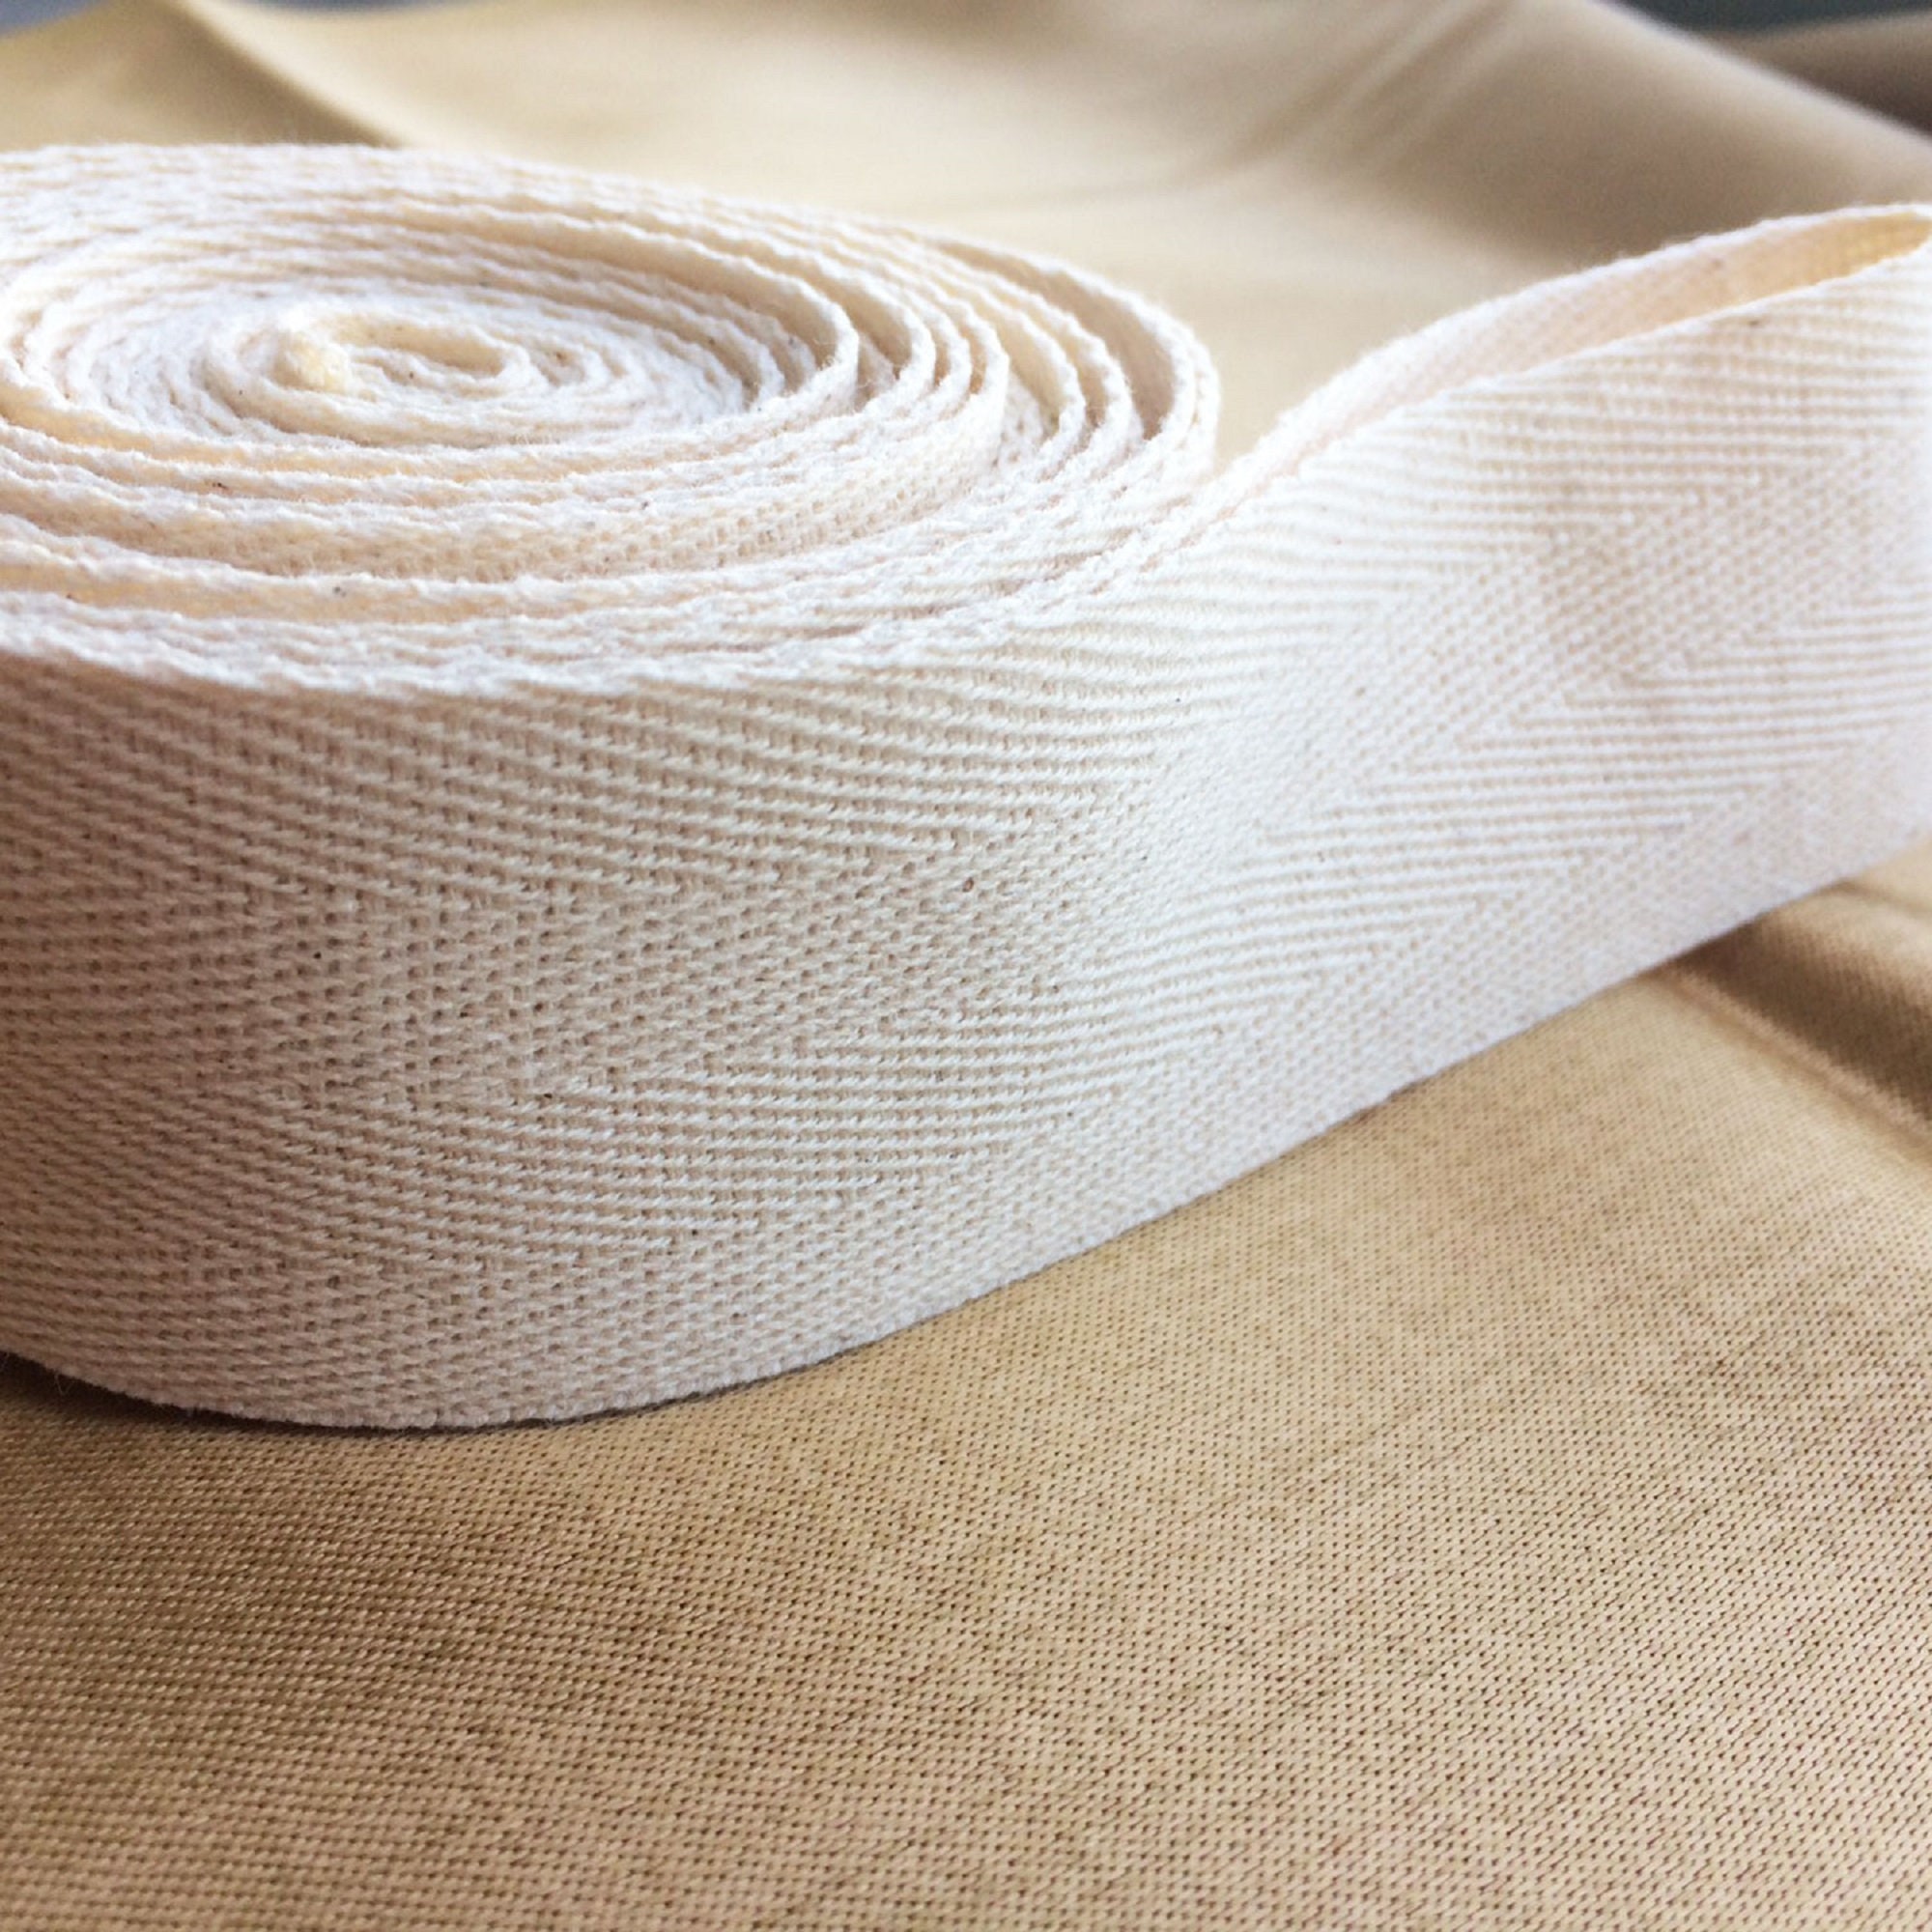 3 Metres Plain Linen Cotton Fabric Ribbon Tape Trim Blank Sewing Label 1.5cm 